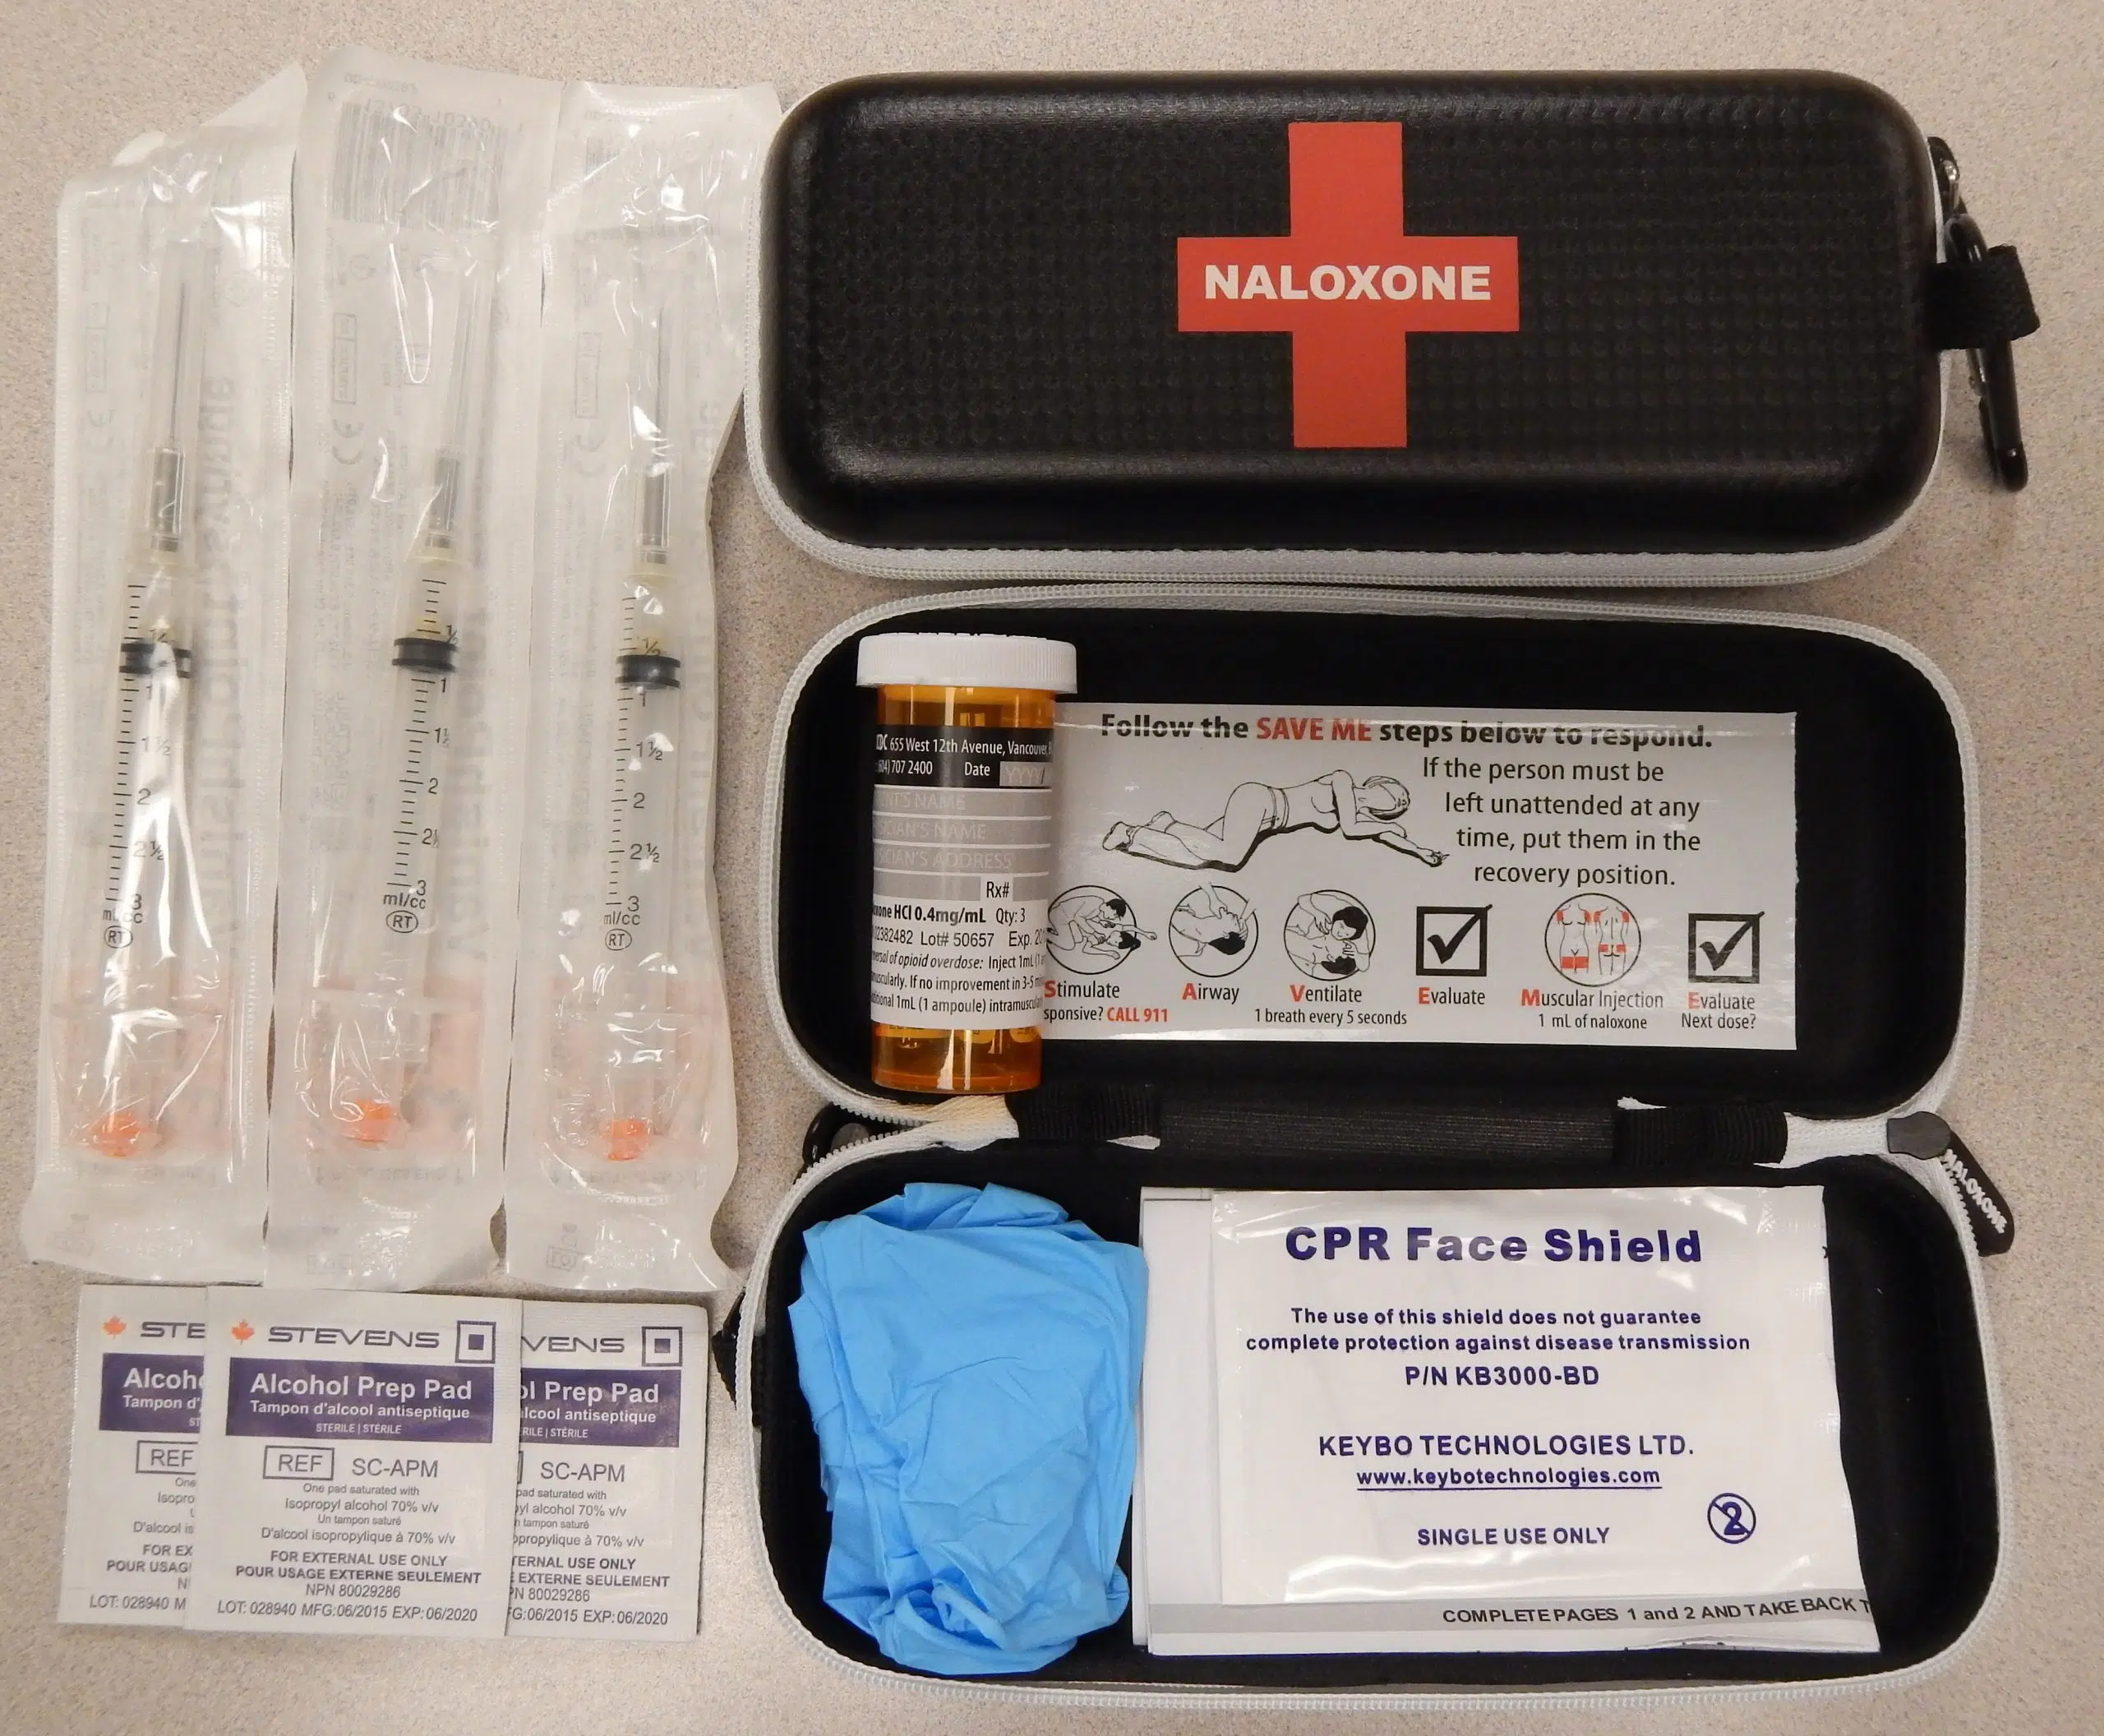 St. John's Ambulance providing free training to combat the overdose crisis